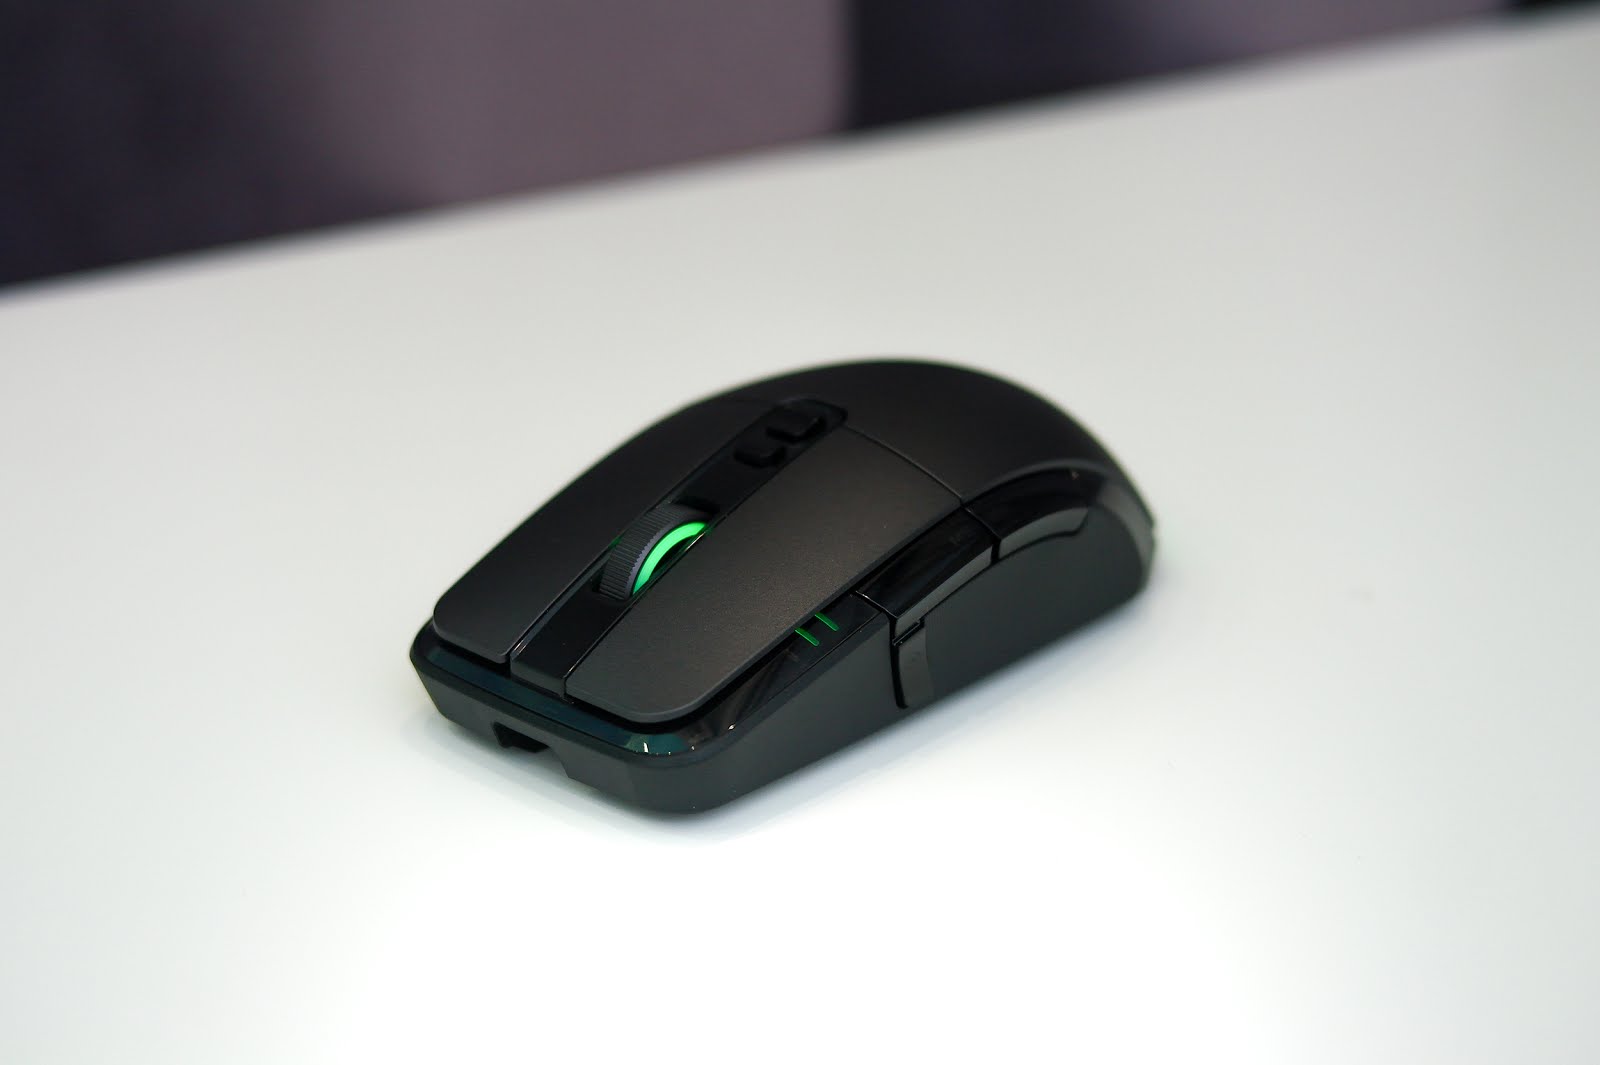 Мышь Xiaomi Mi Gaming Mouse